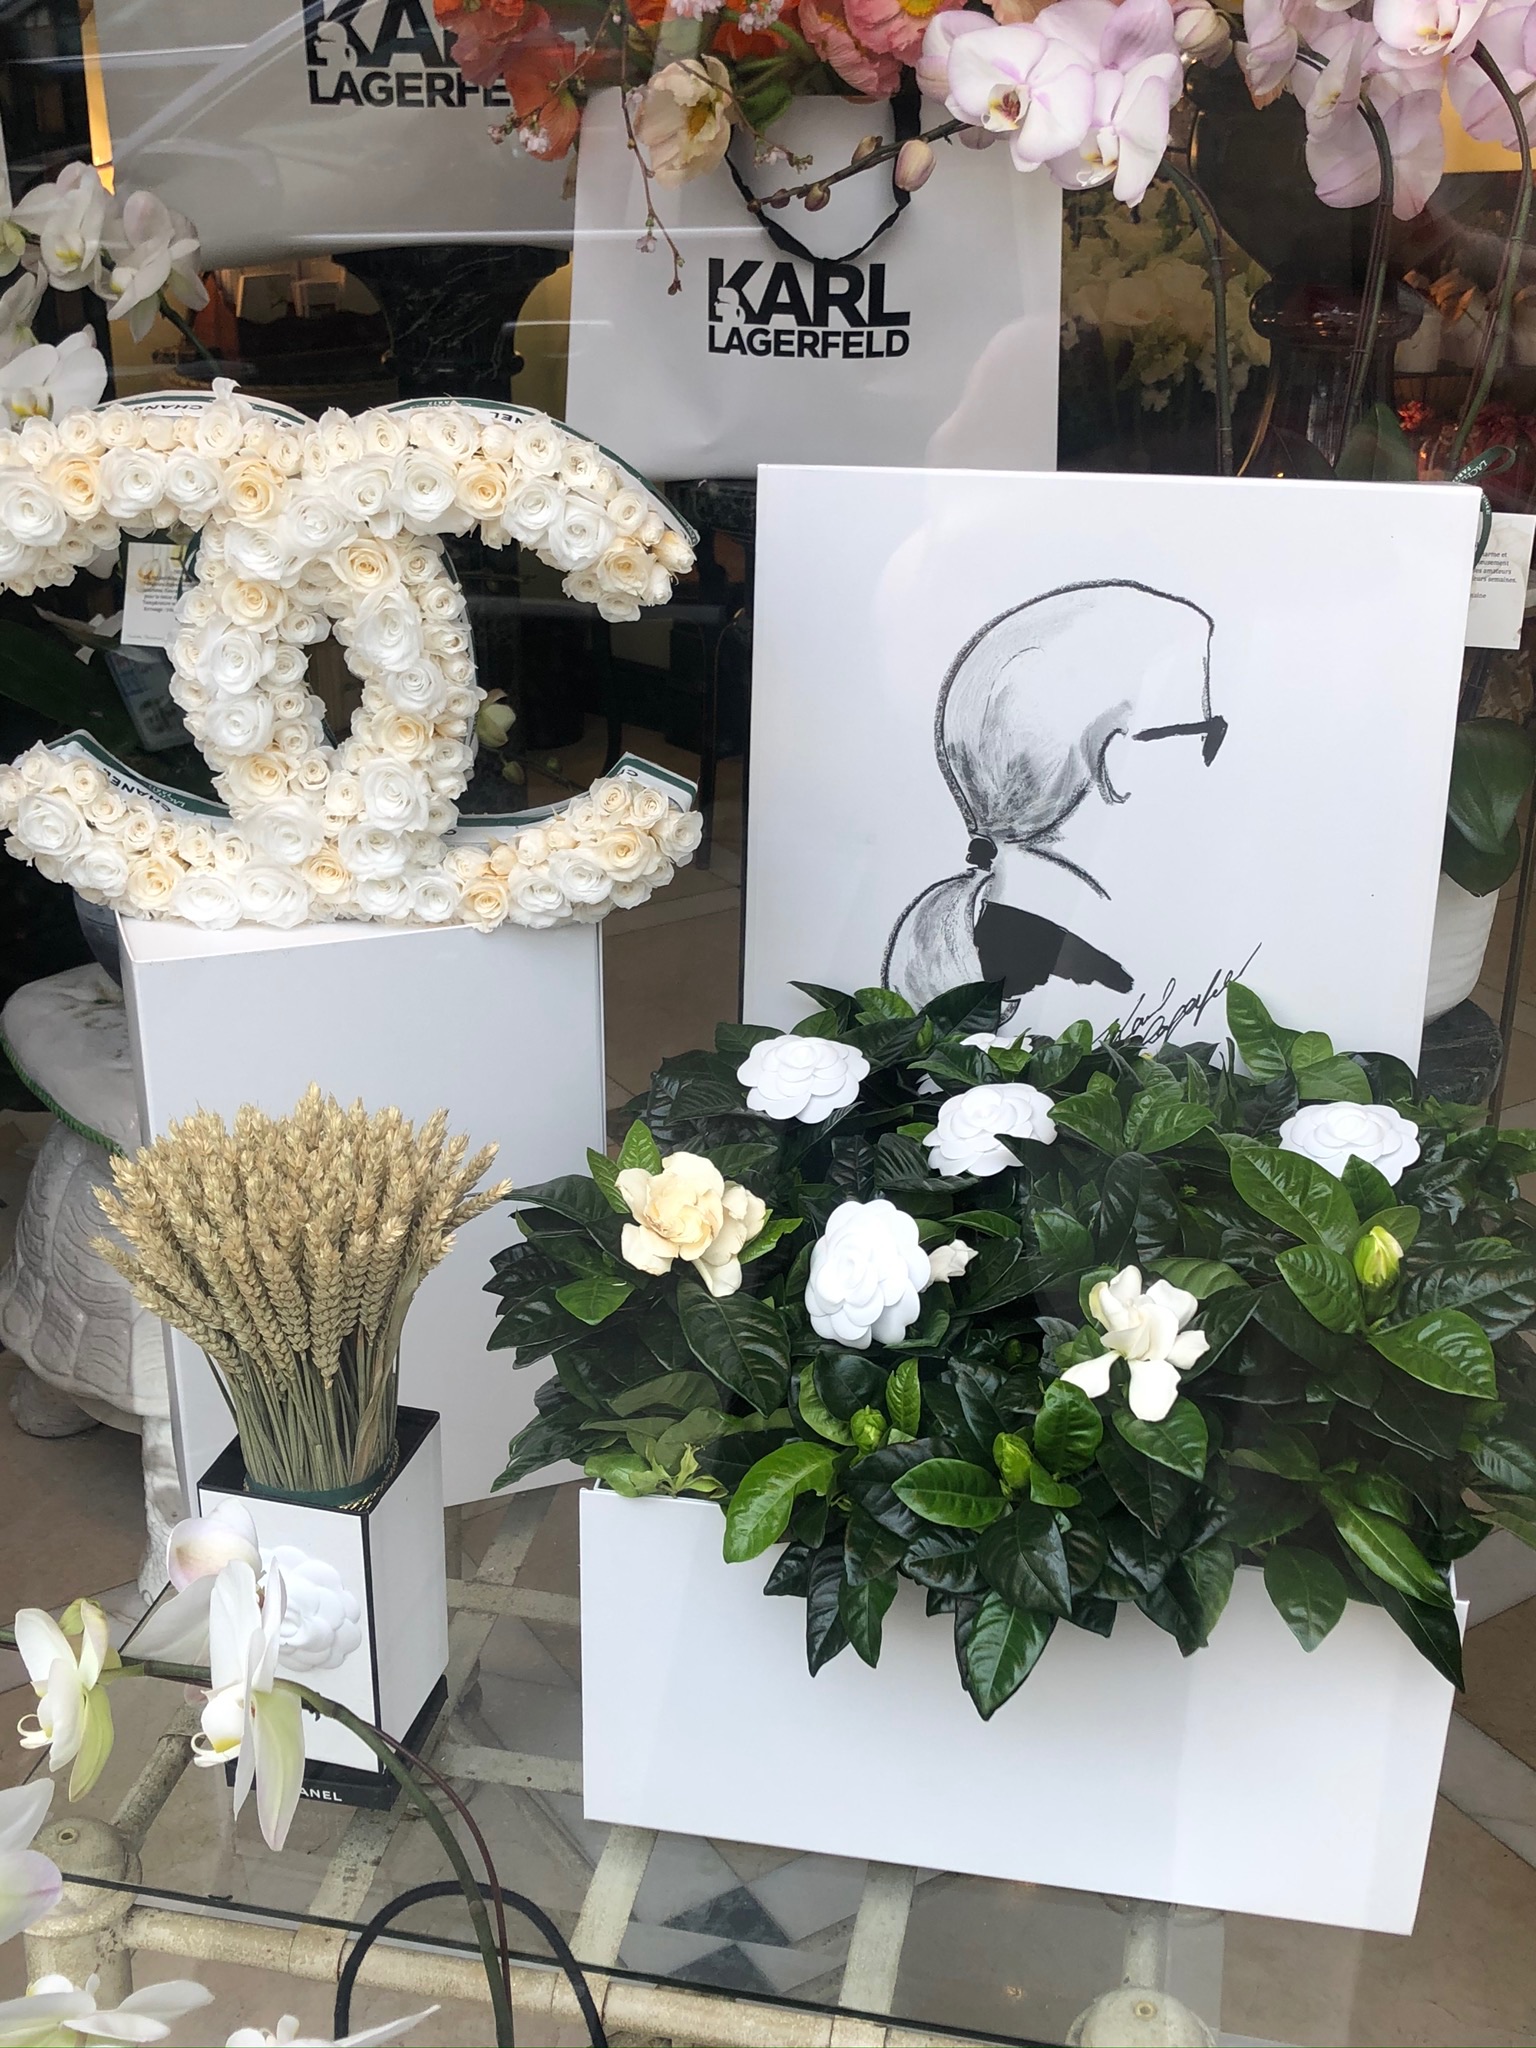 Flowers for Karl Lagerfeld